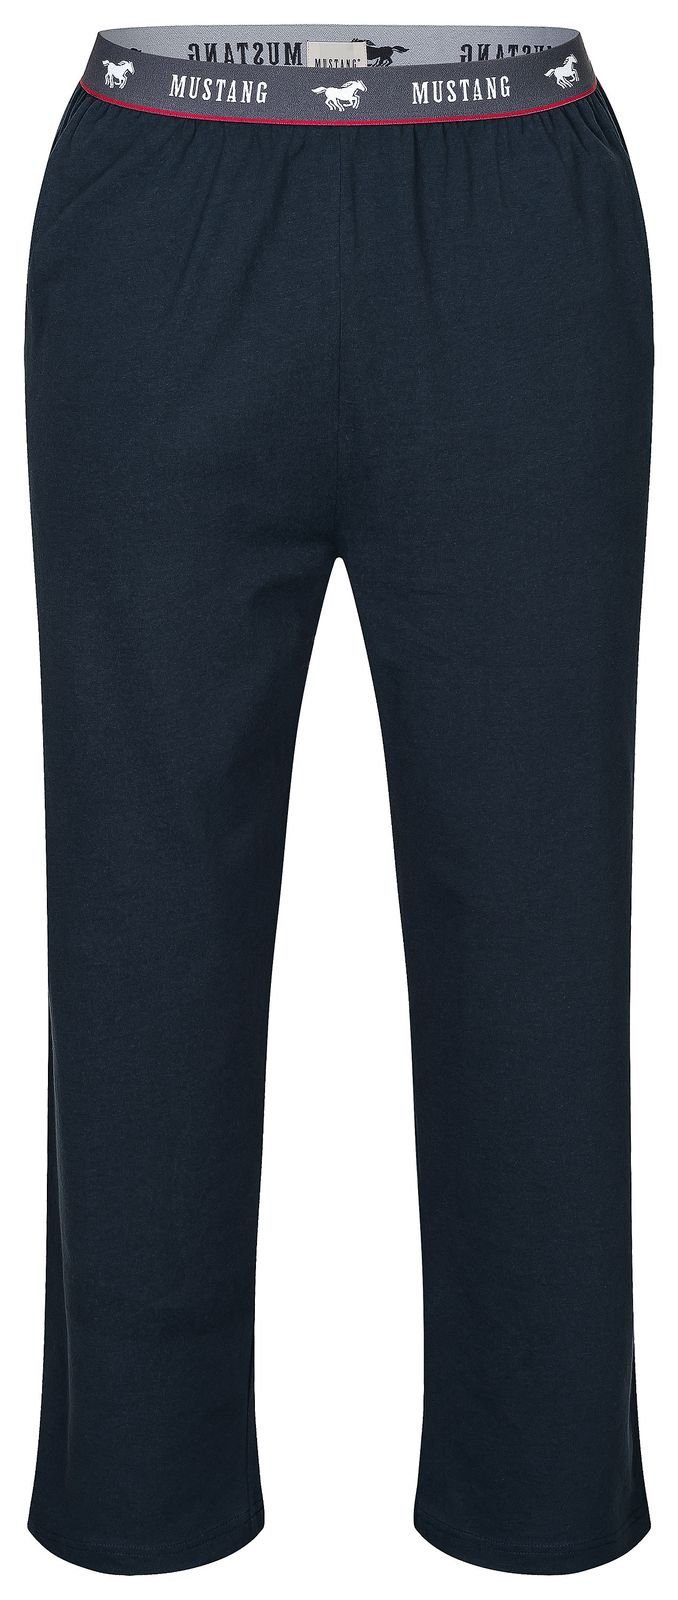 MUSTANG Loungepants Long Pants Lounge Hose Trousers Freizeithose roter Kontraststreifen und Mustangbranding Navy